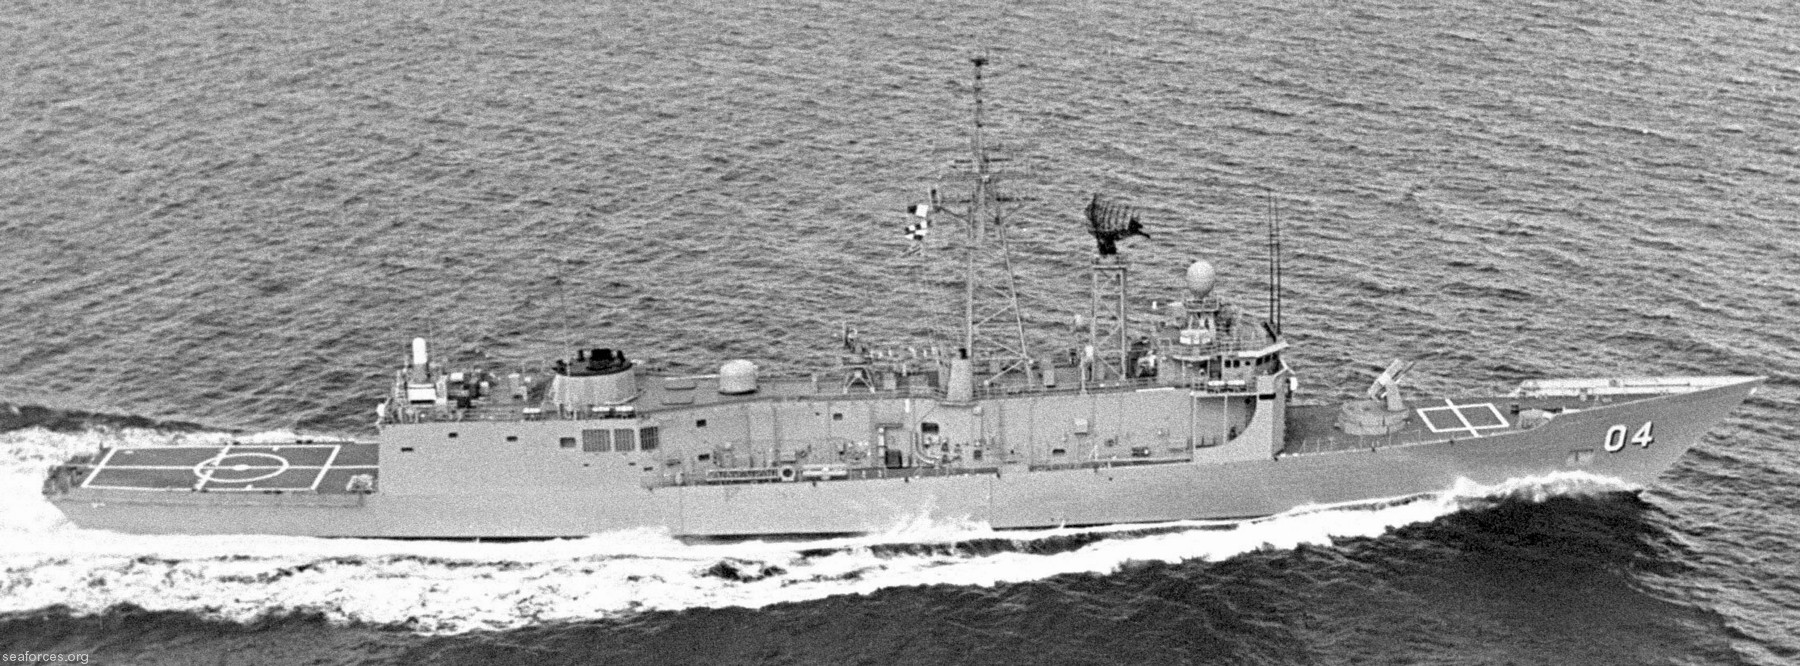 ffg-04 hmas darwin adelaide class frigate royal australian navy 1984 14